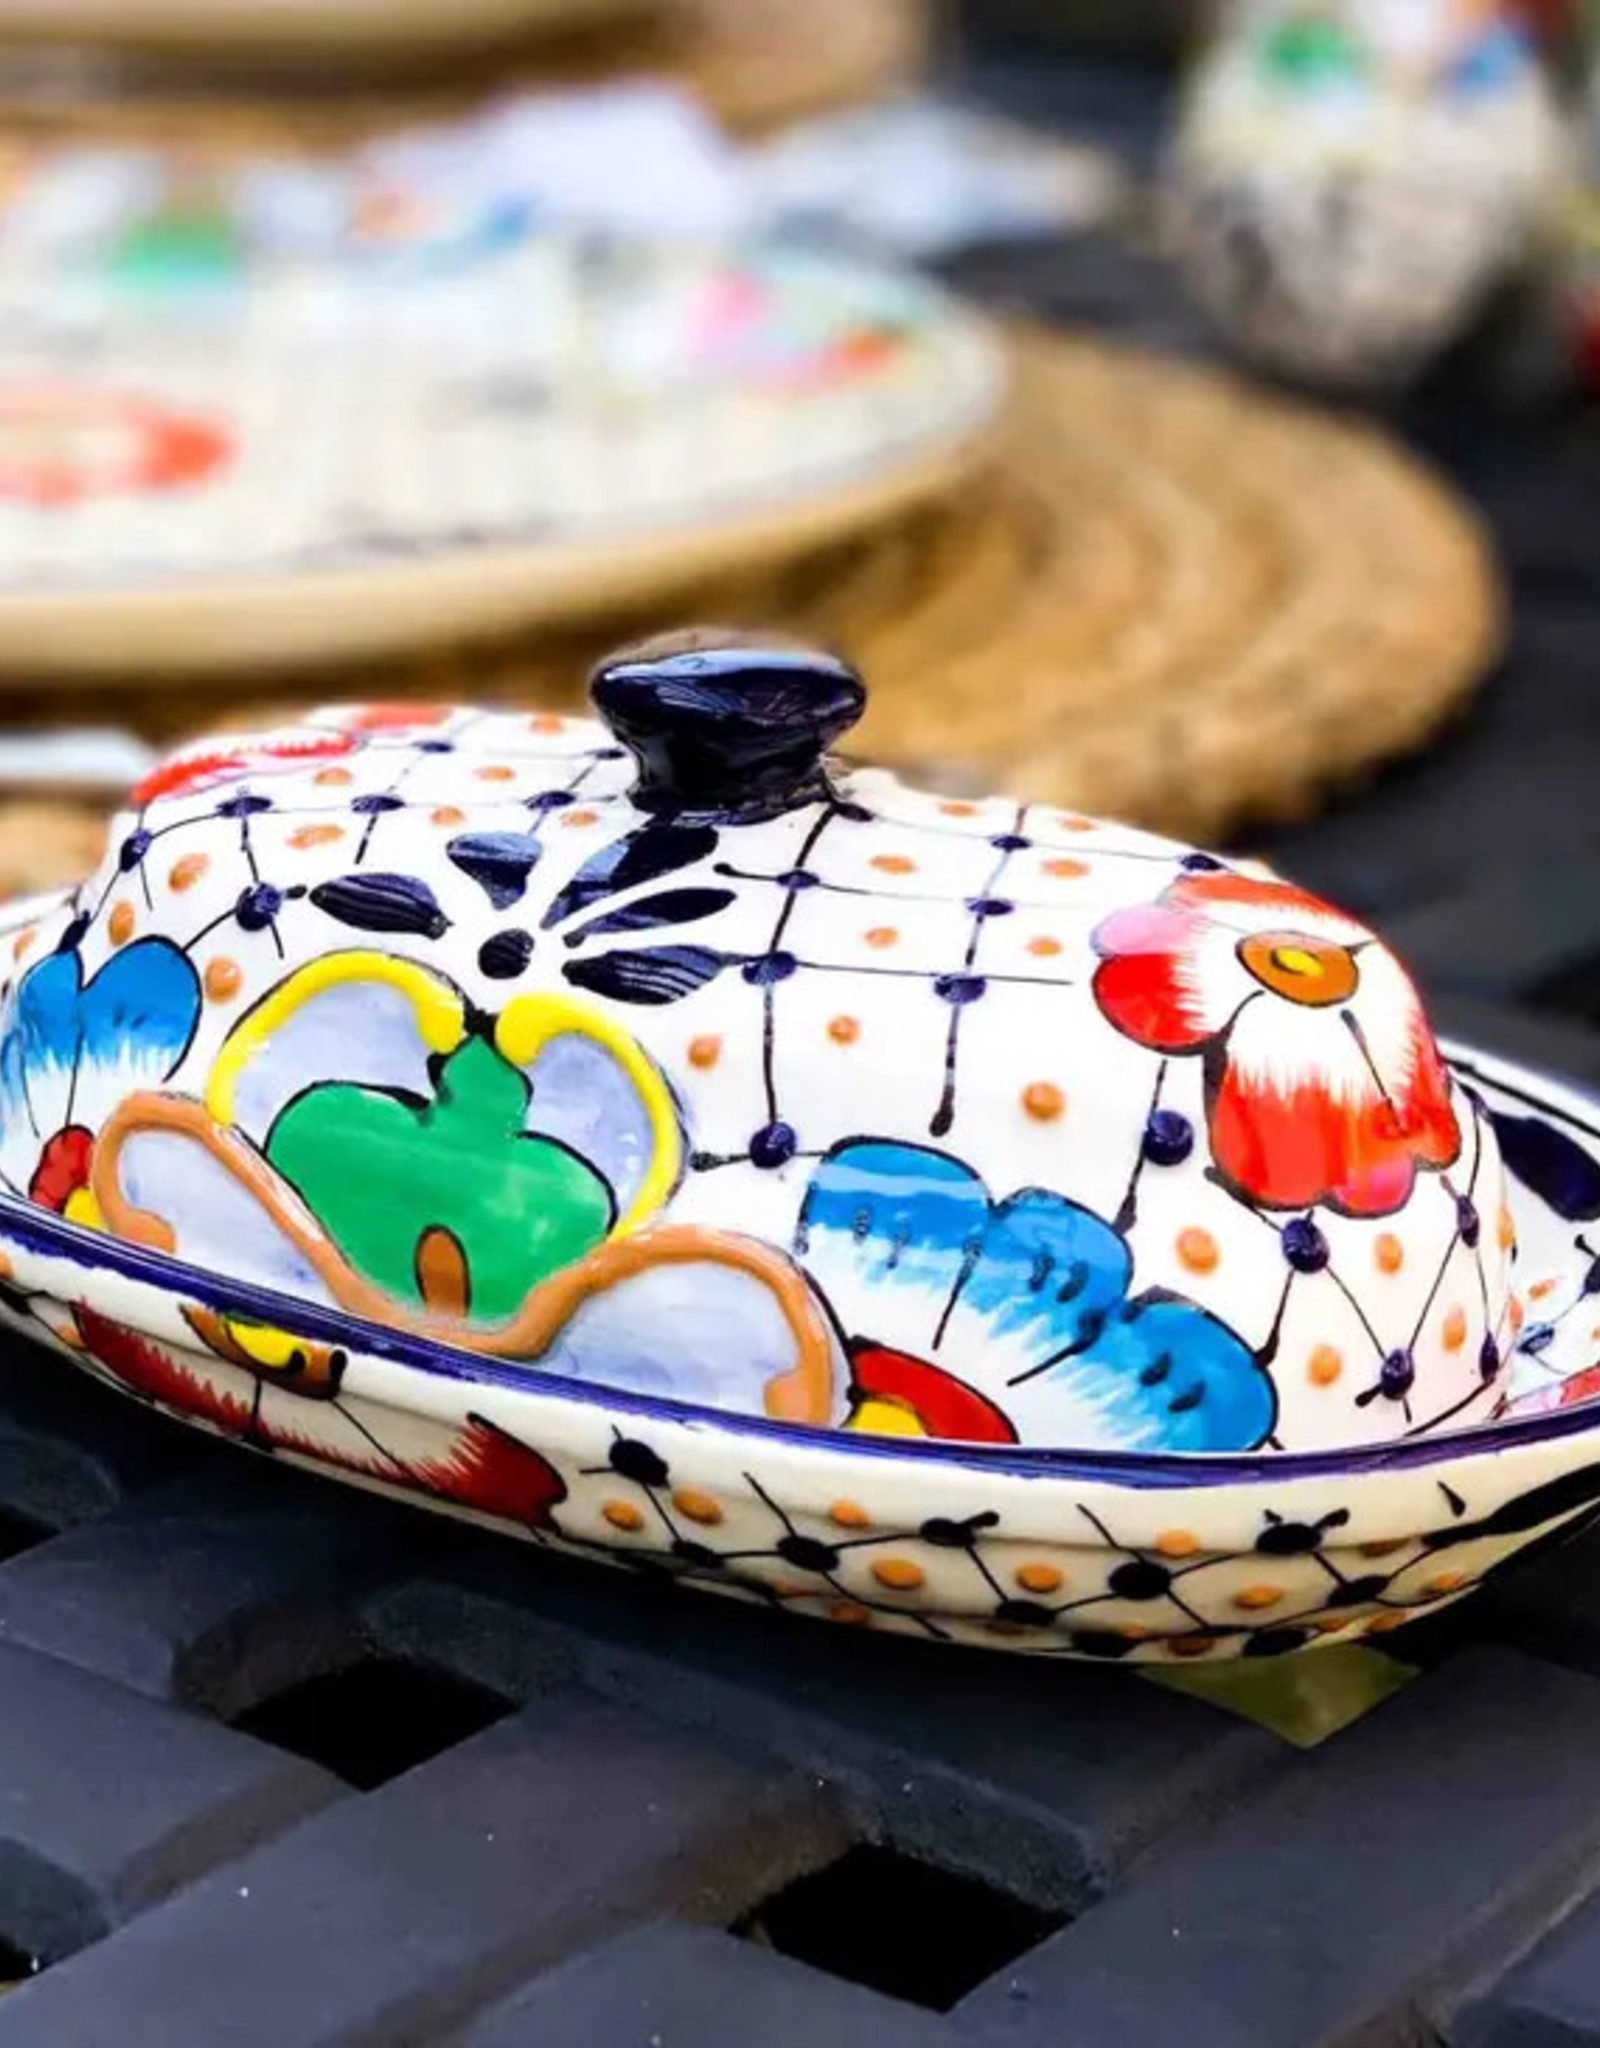 Global Crafts Encantada Butter Dish, Dots & Flowers